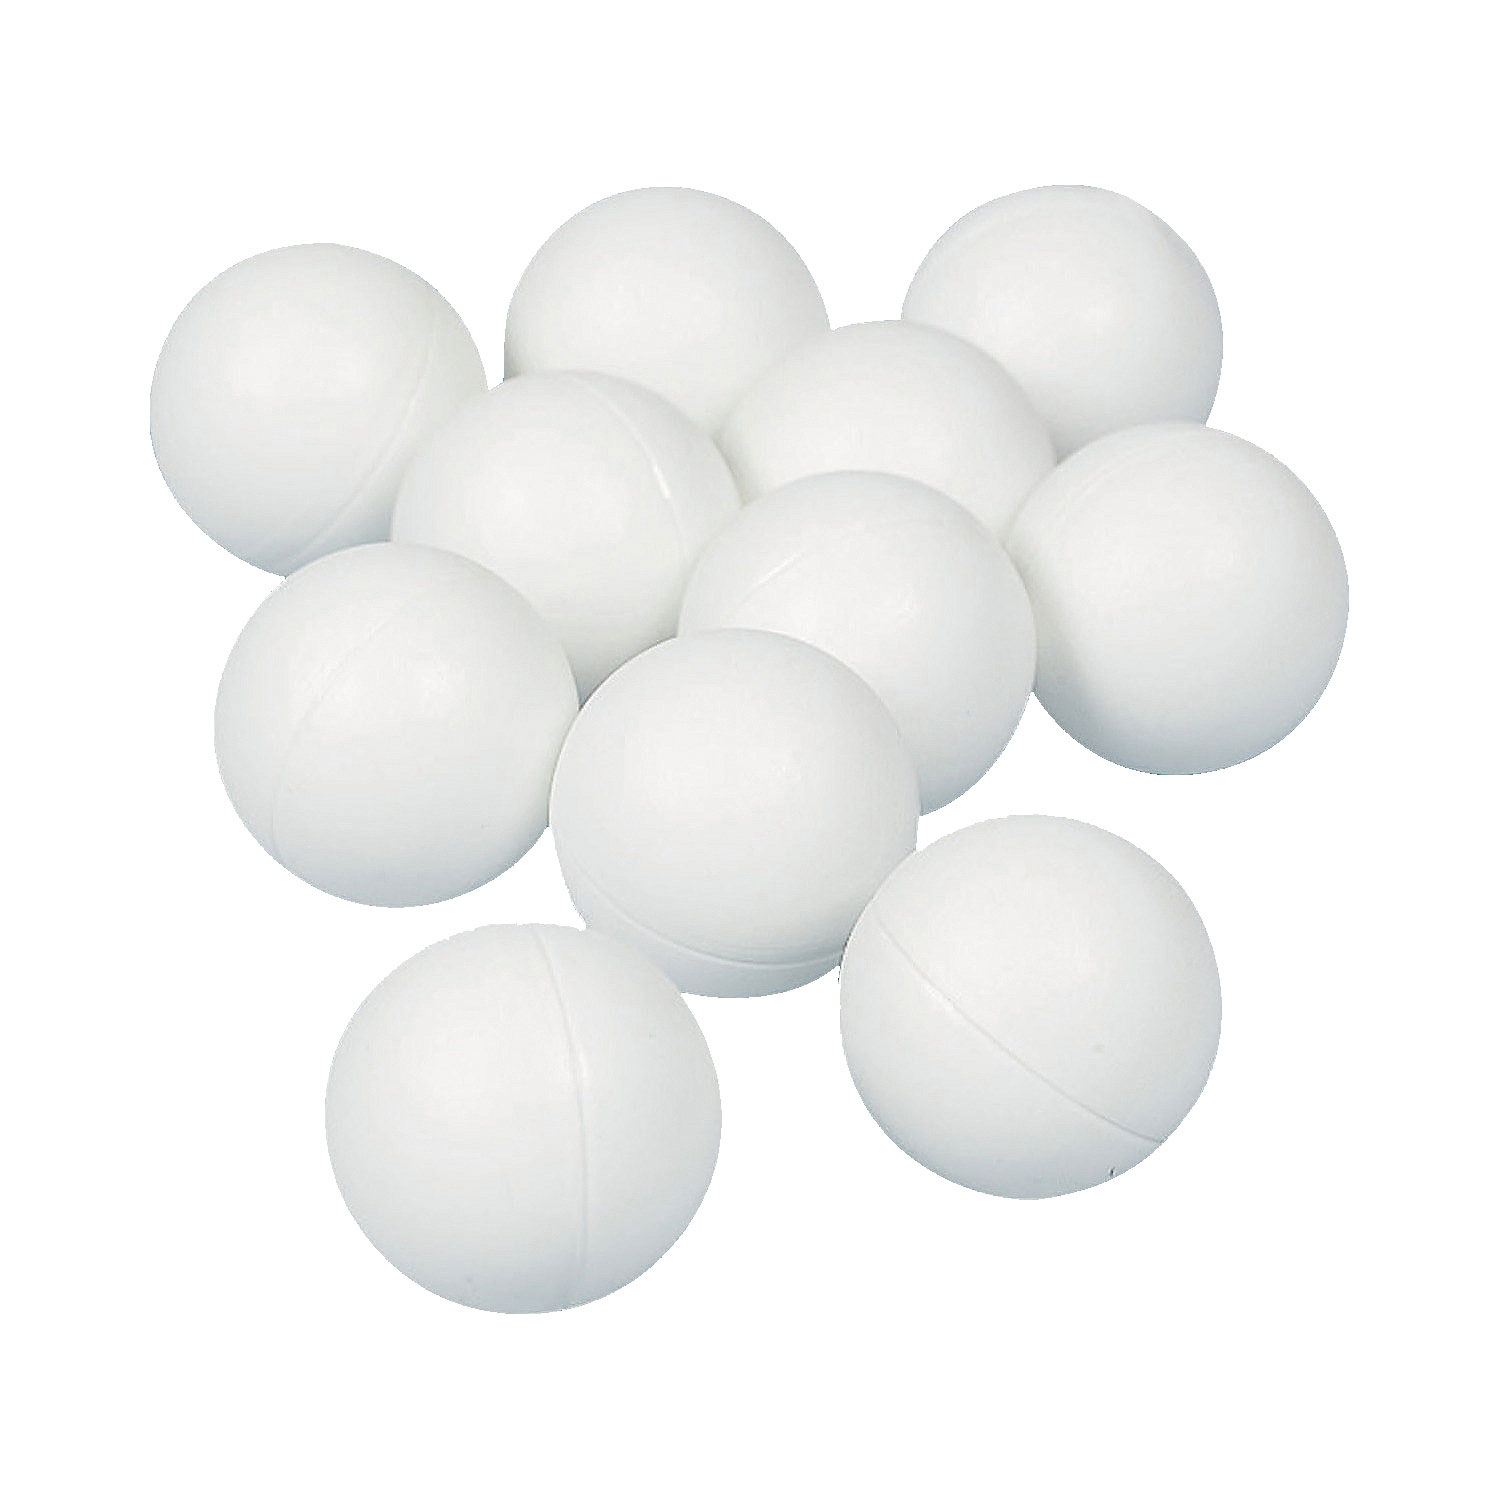 40mm Enterta Lestiour Ping Pong Balls 50 Pack Colored Ping Pong Balls Bulk 2.4g 